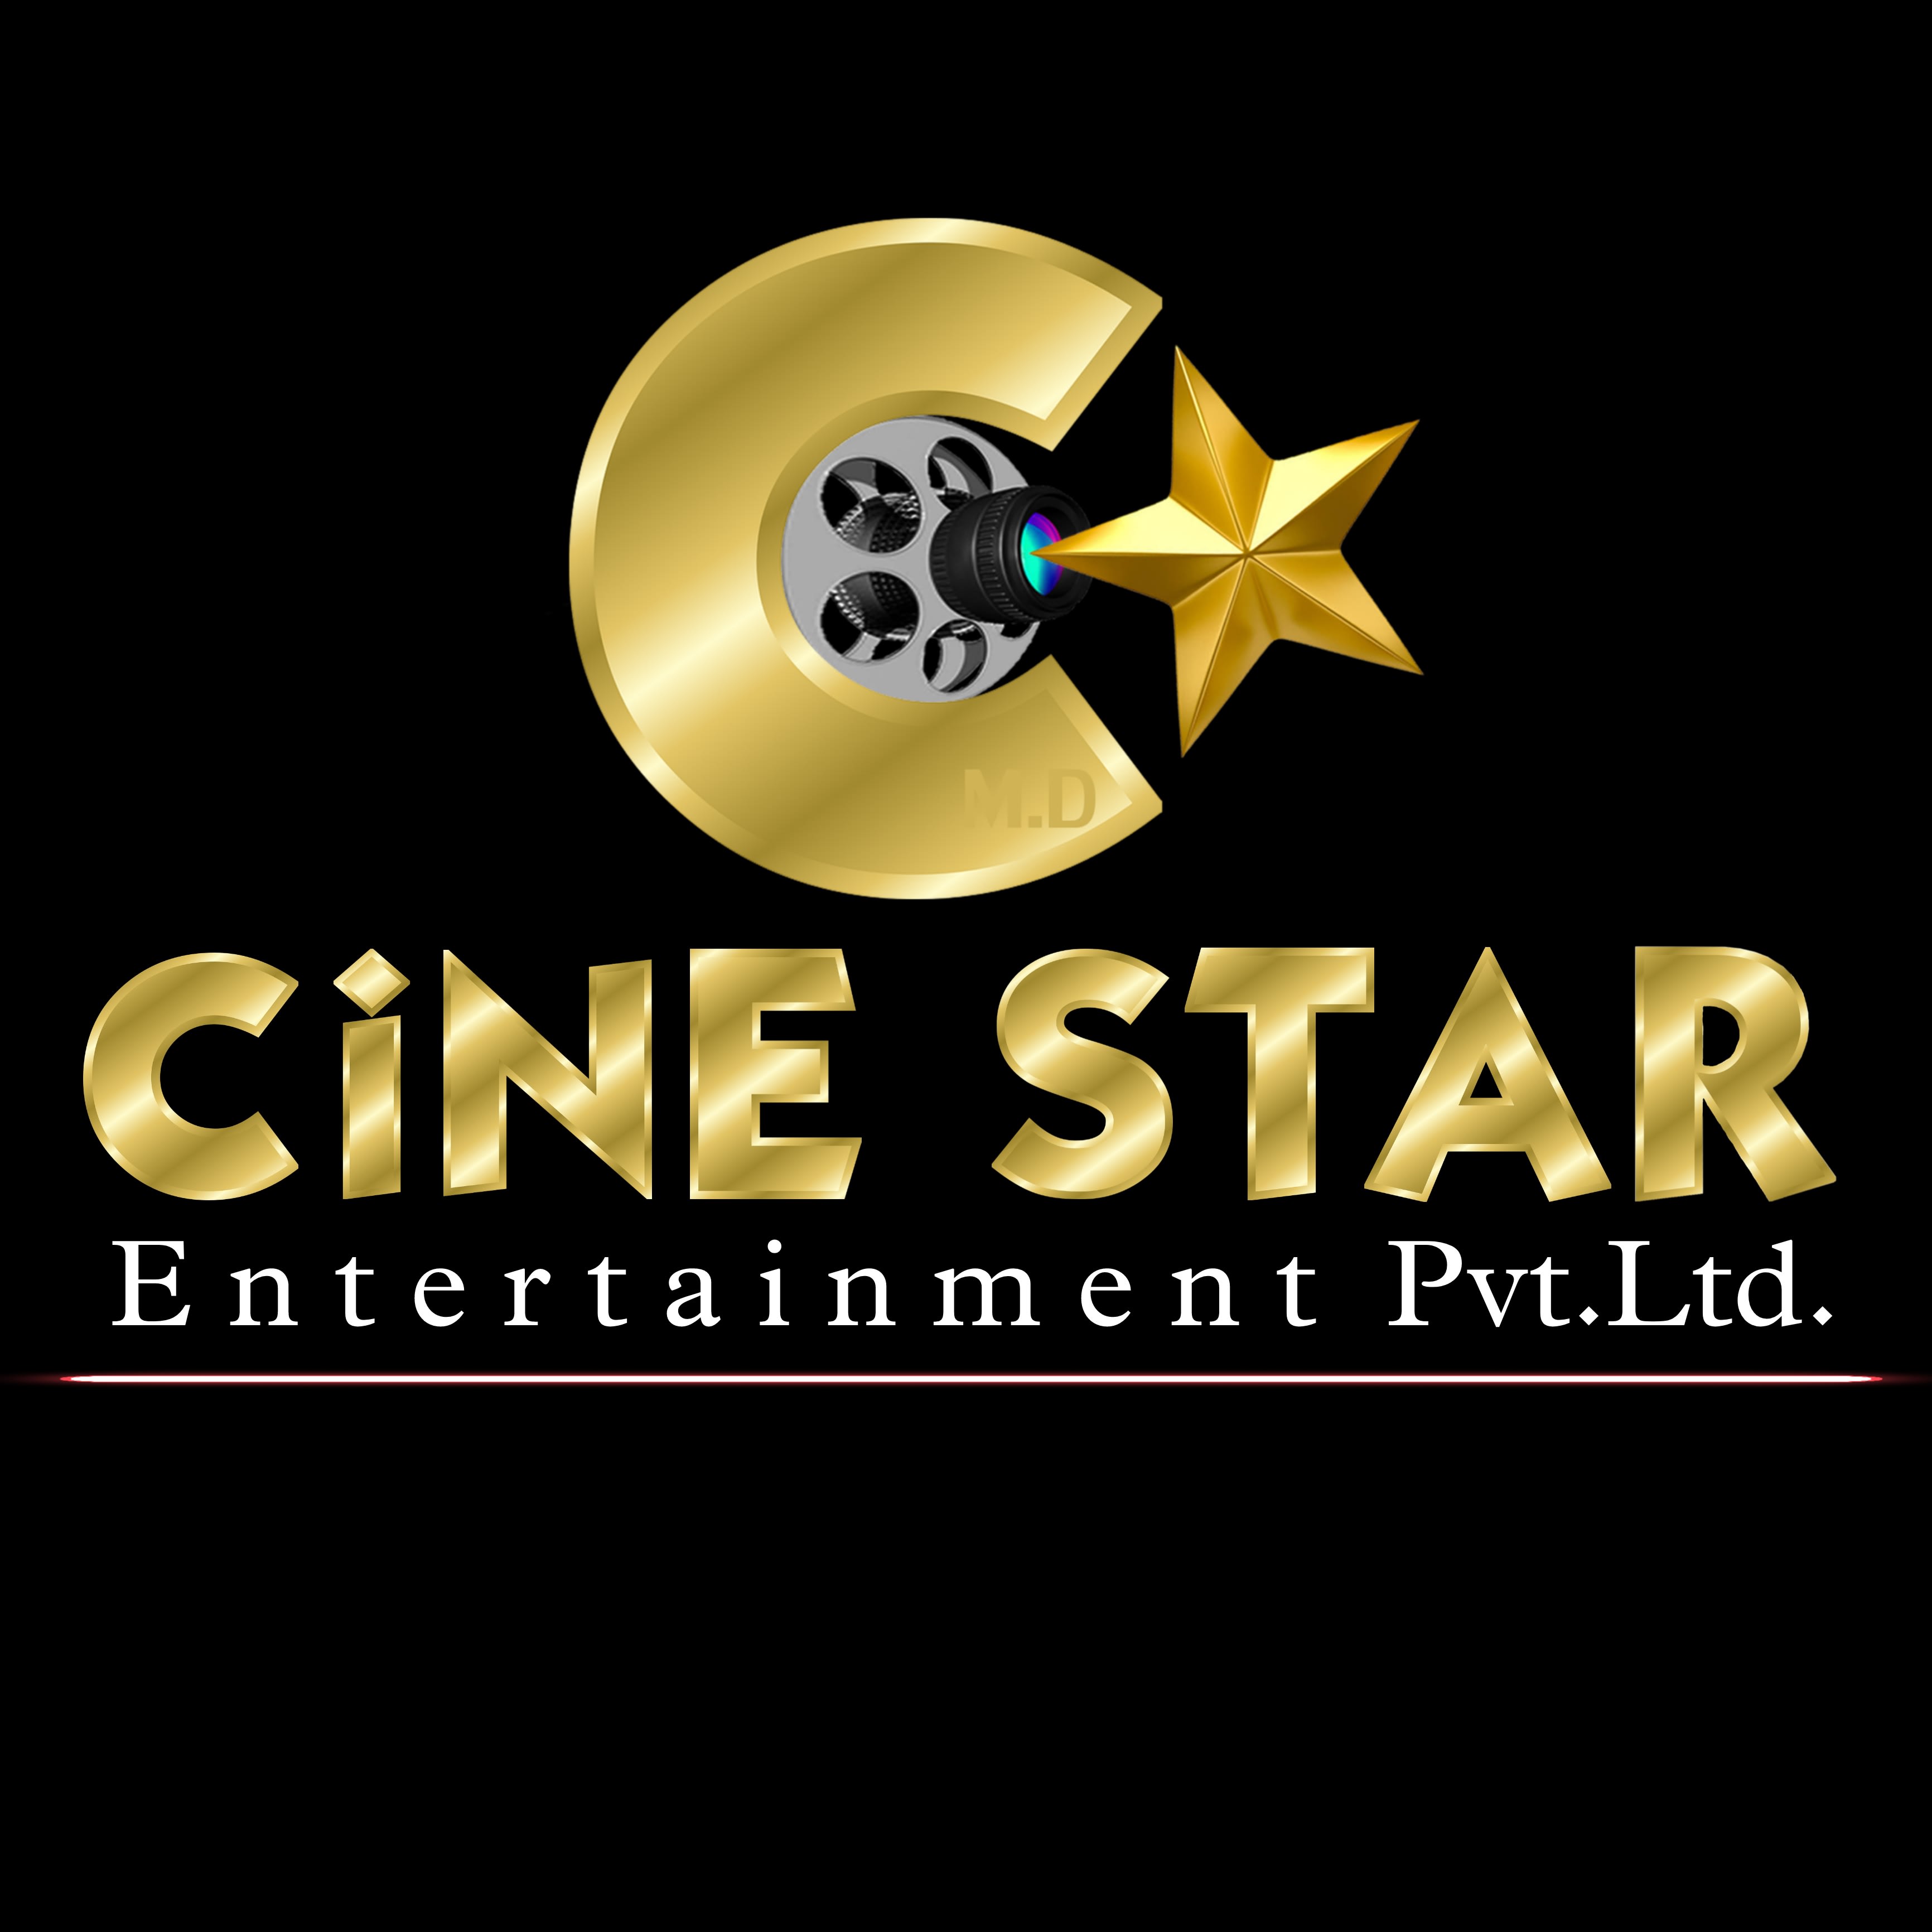 Cine Star Entertainment Pvt.Ltd